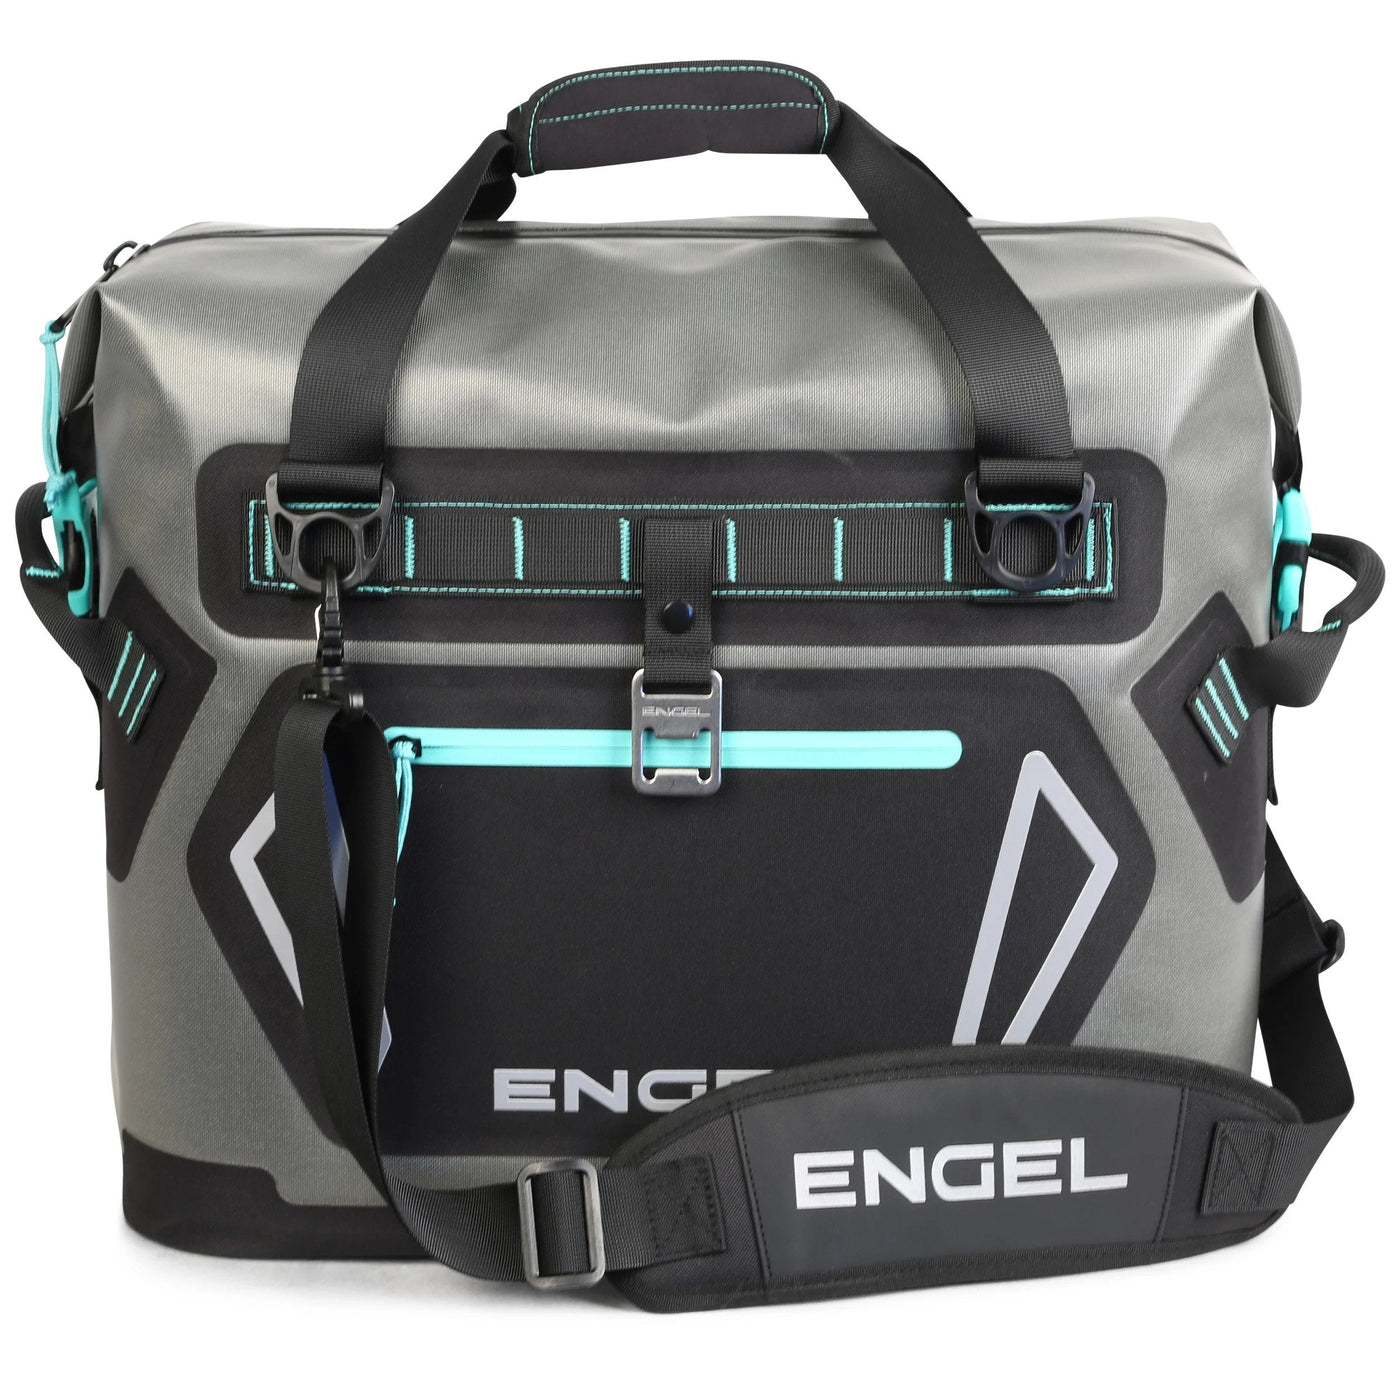 Engel® HD20 Heavy-Duty Soft Sided Cooler Bag Coolers Engel Coolers Dark Gray/Seafoam 